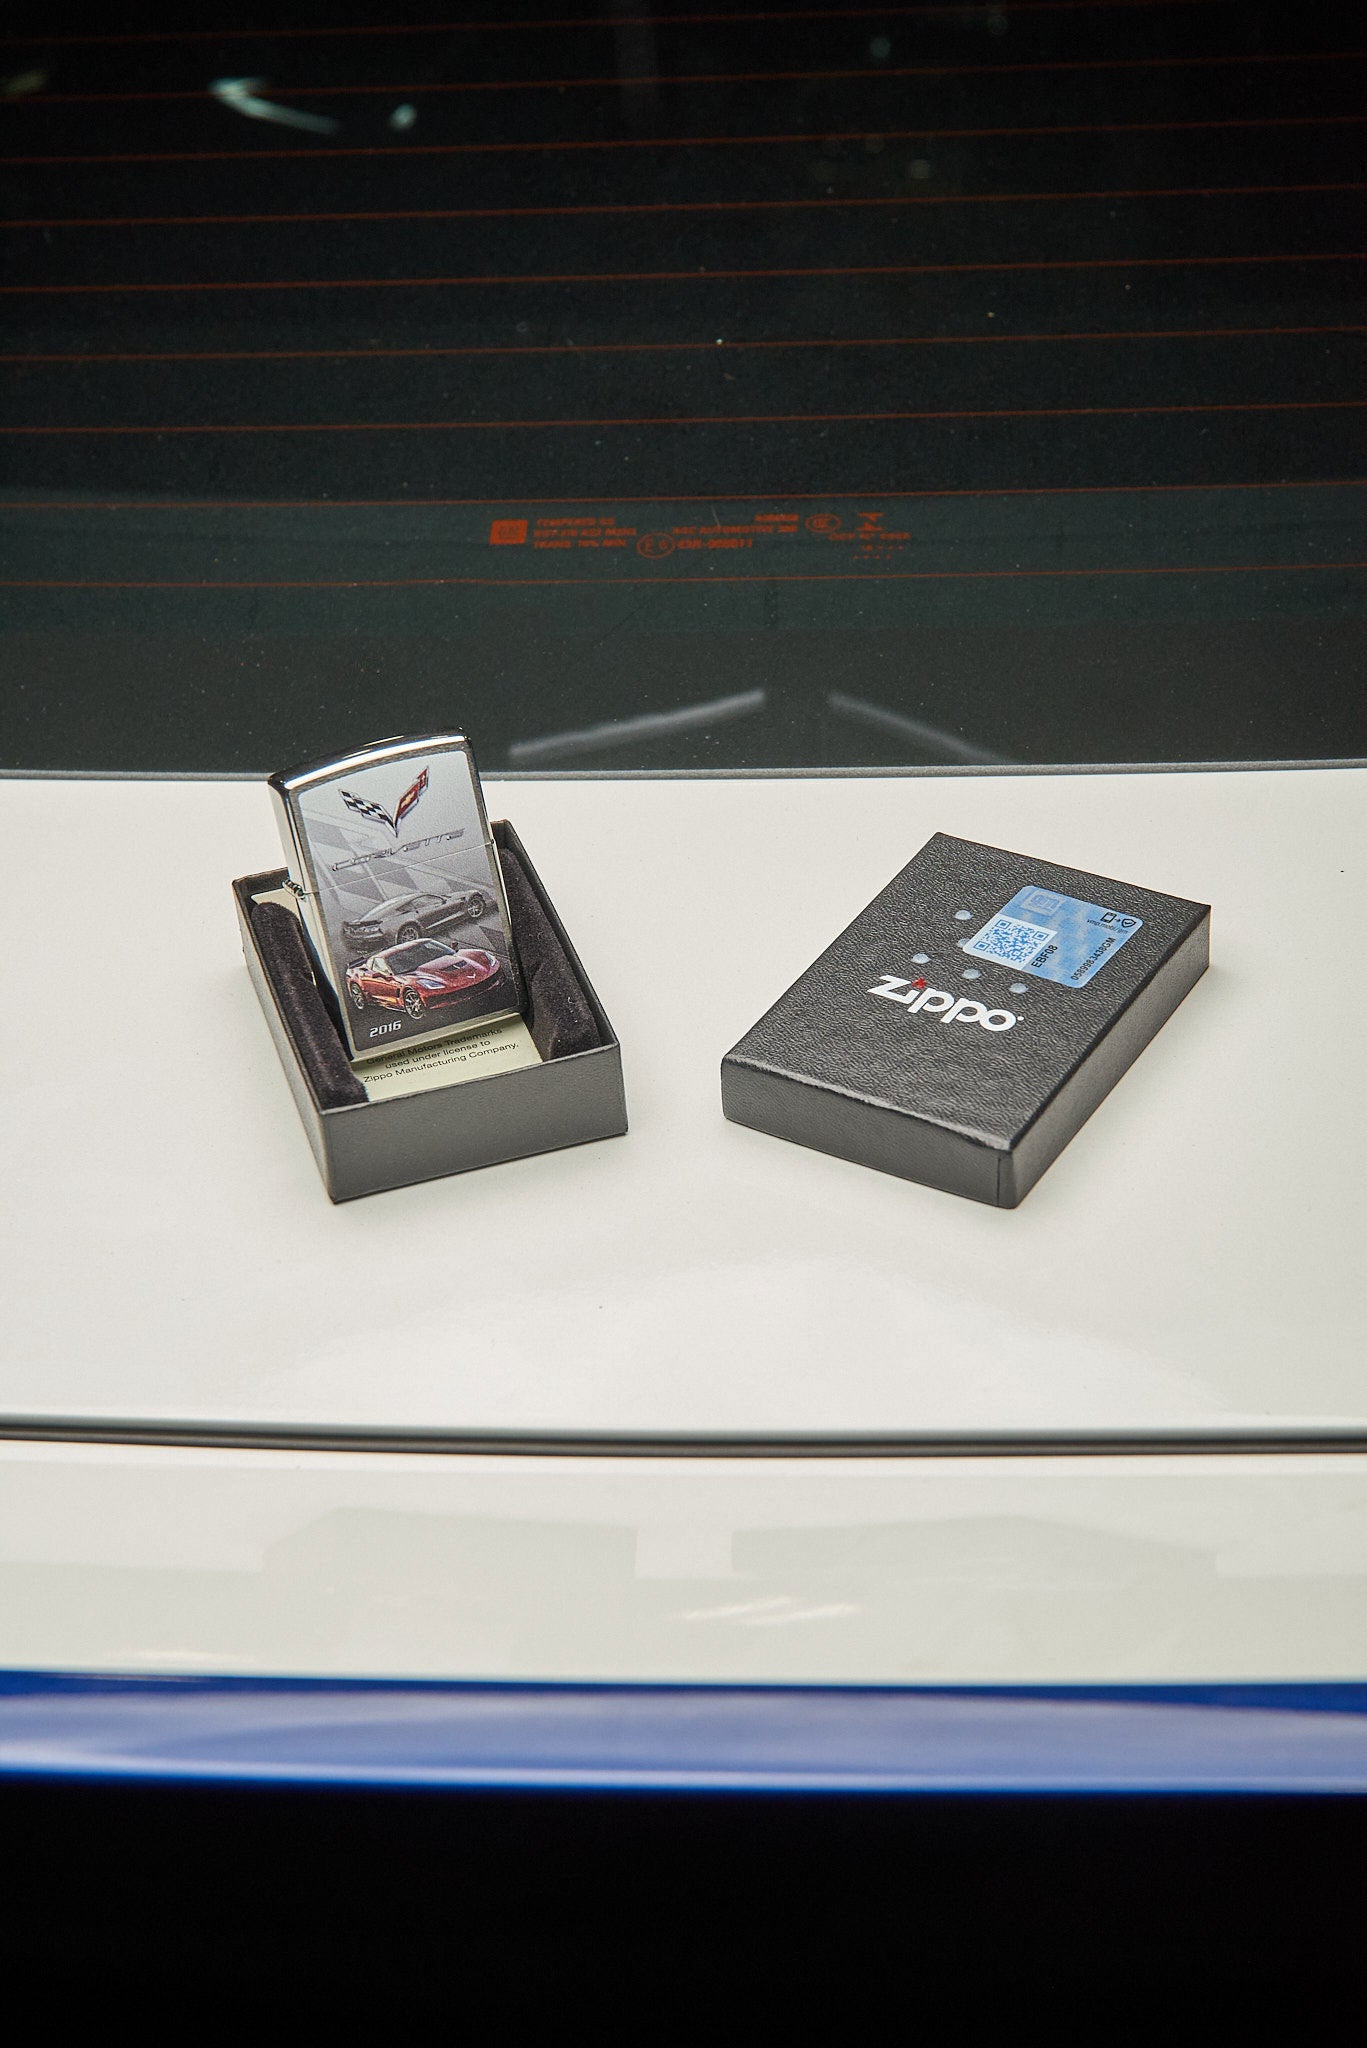 2016 Corvette Brushed Chrome Lighter Lifestyle shown in the box